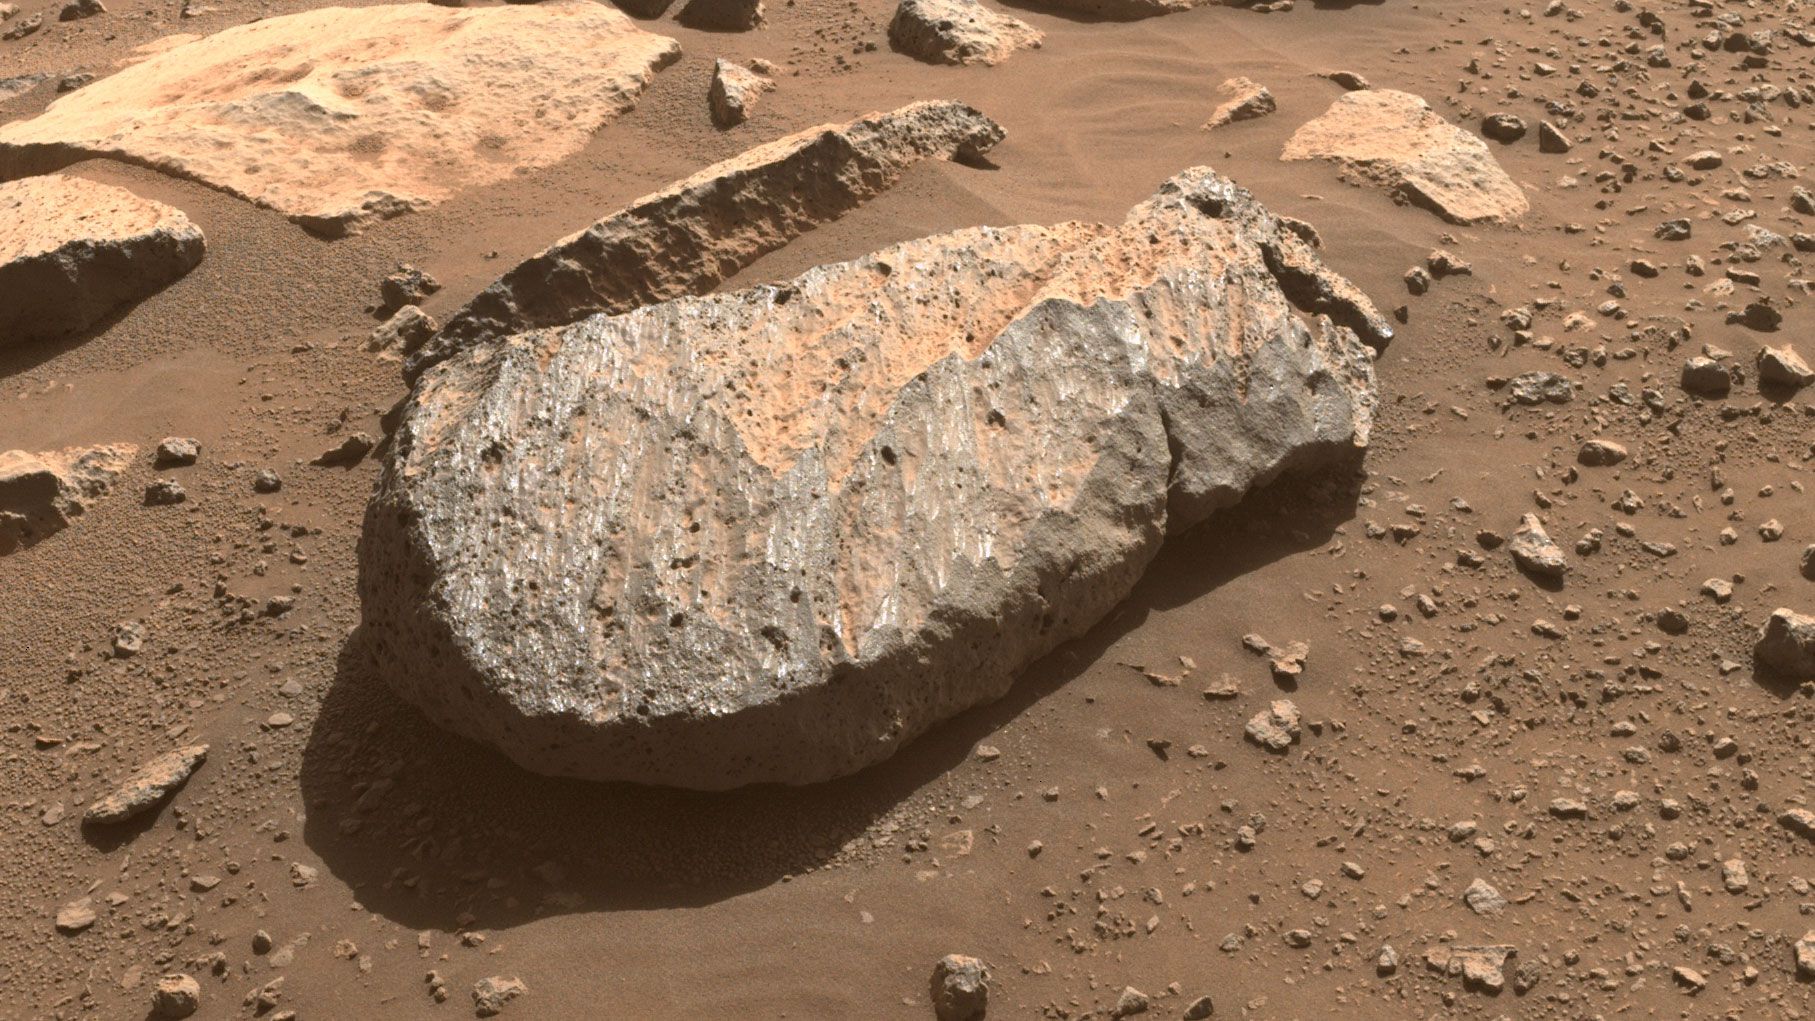 NASA confirms Perseverance Mars rover got its first piece of rock